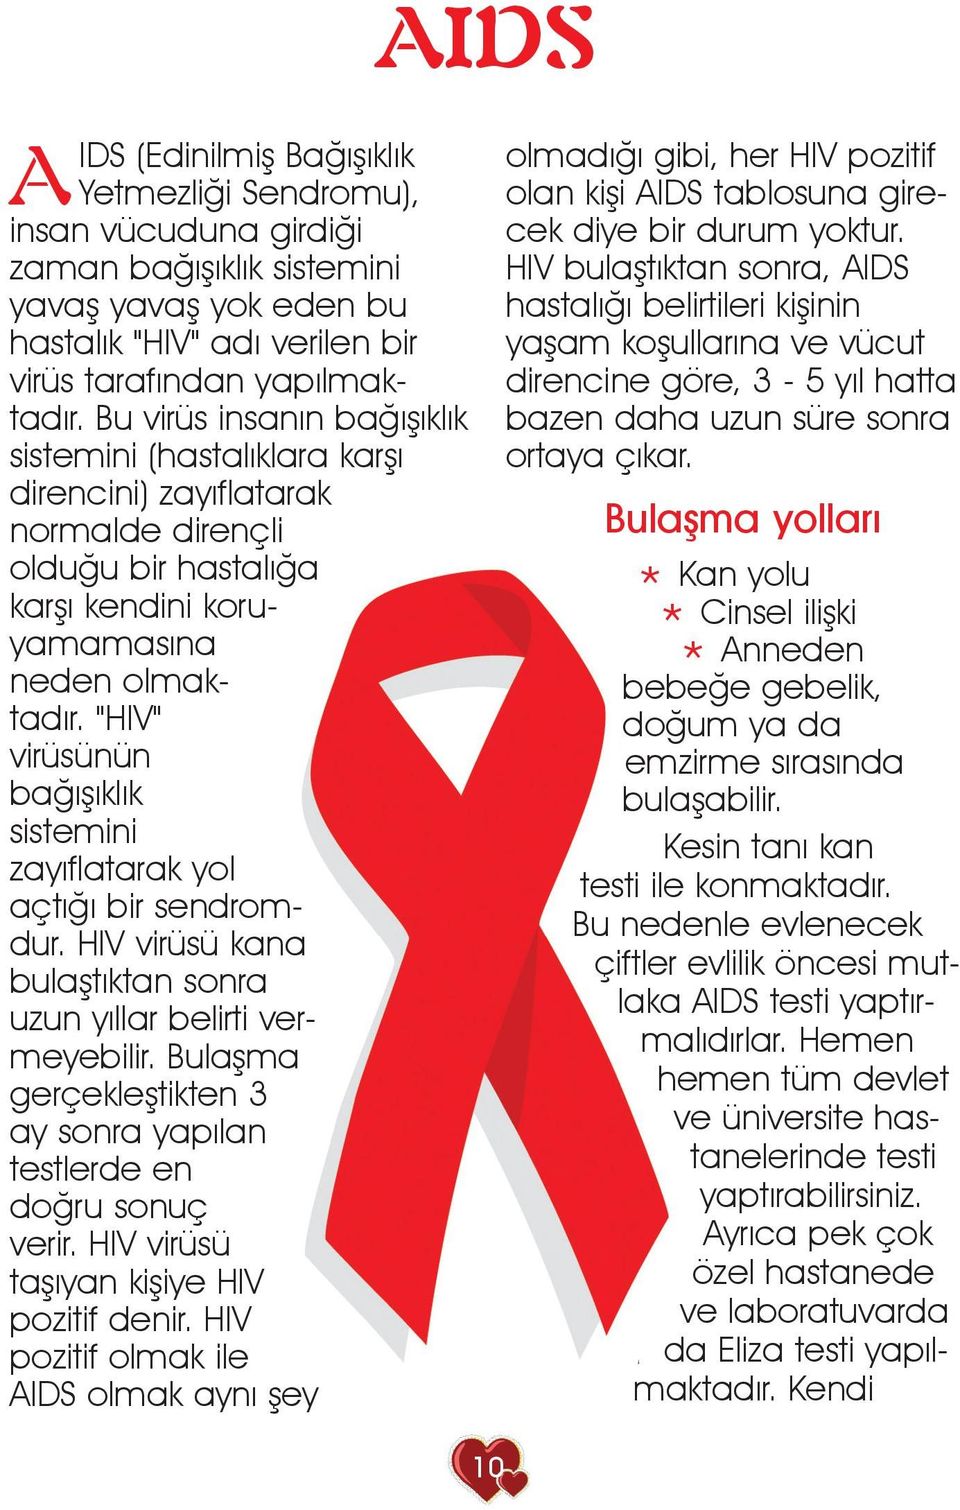 "HIV" virüsünün baðýþýklýk sistemini zayýflatarak yol açtýðý bir sendromdur. HIV virüsü kana bulaþtýktan sonra uzun yýllar belirti vermeyebilir.